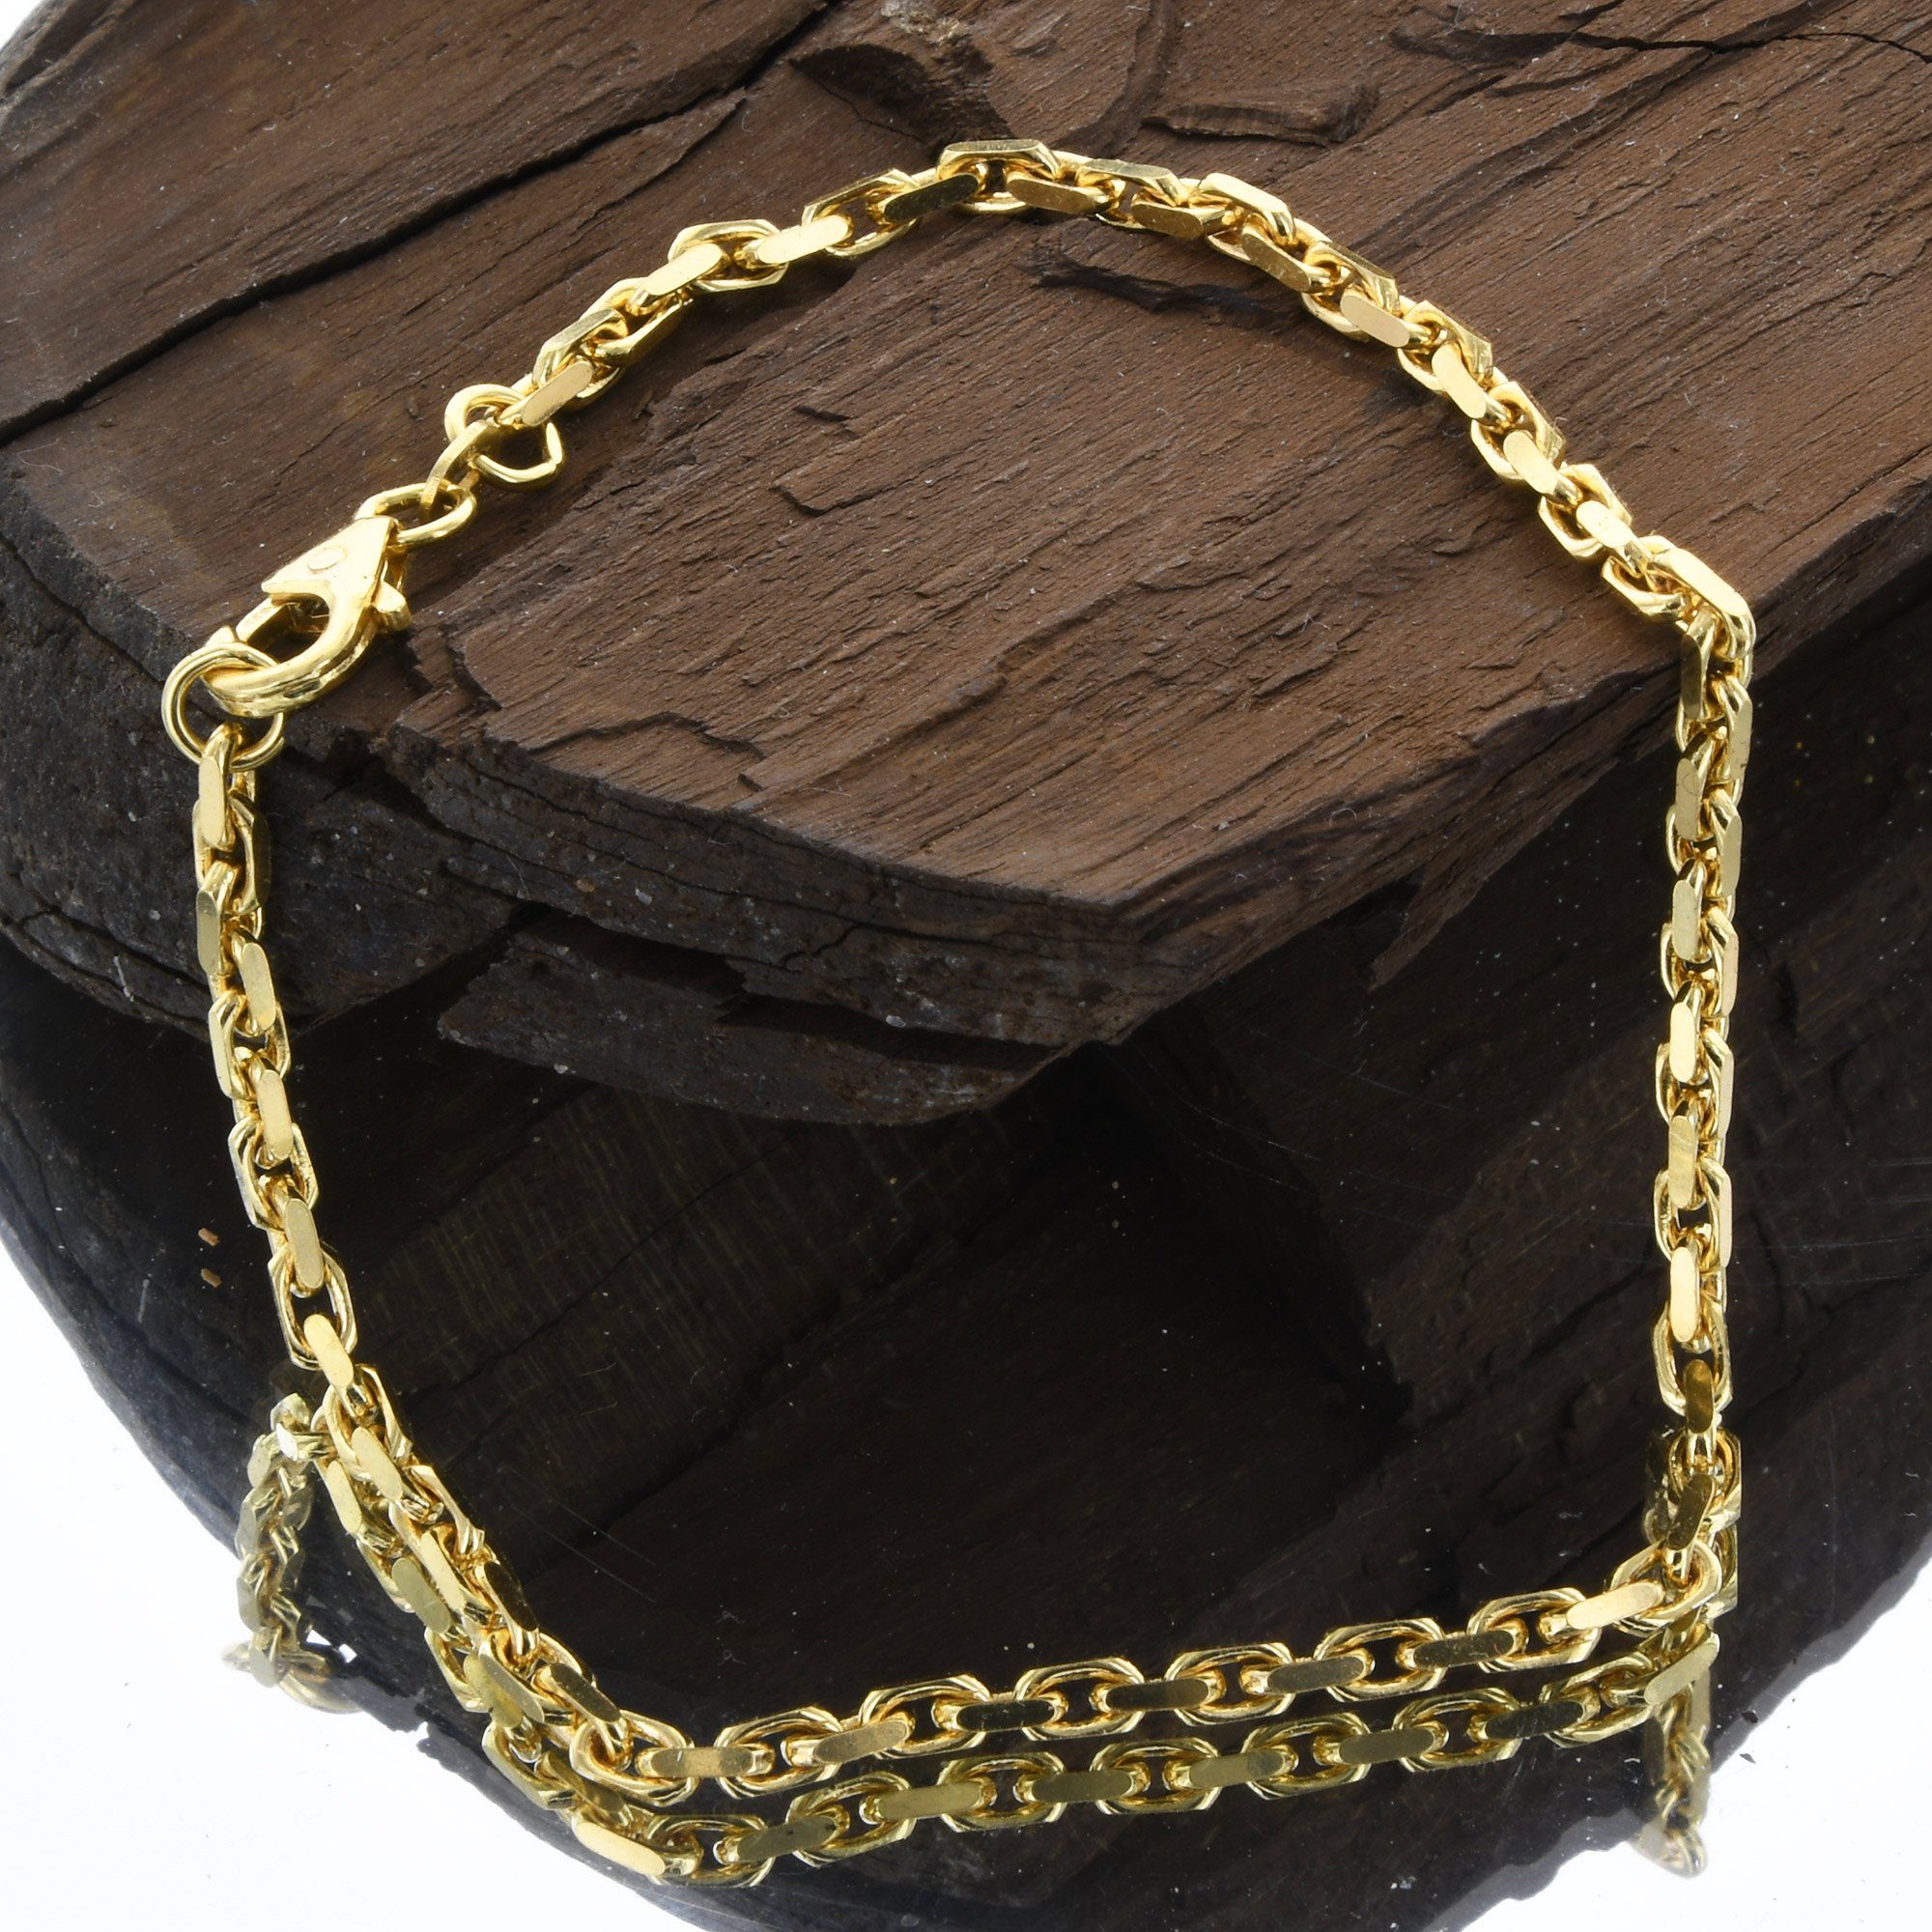 Herren Schmuck HOPLO Goldkette 2,5 mm 21 cm 585 - 14 Karat Gold Armkette Ankerkette diamantiert massiv Gold hochwertige Goldkett